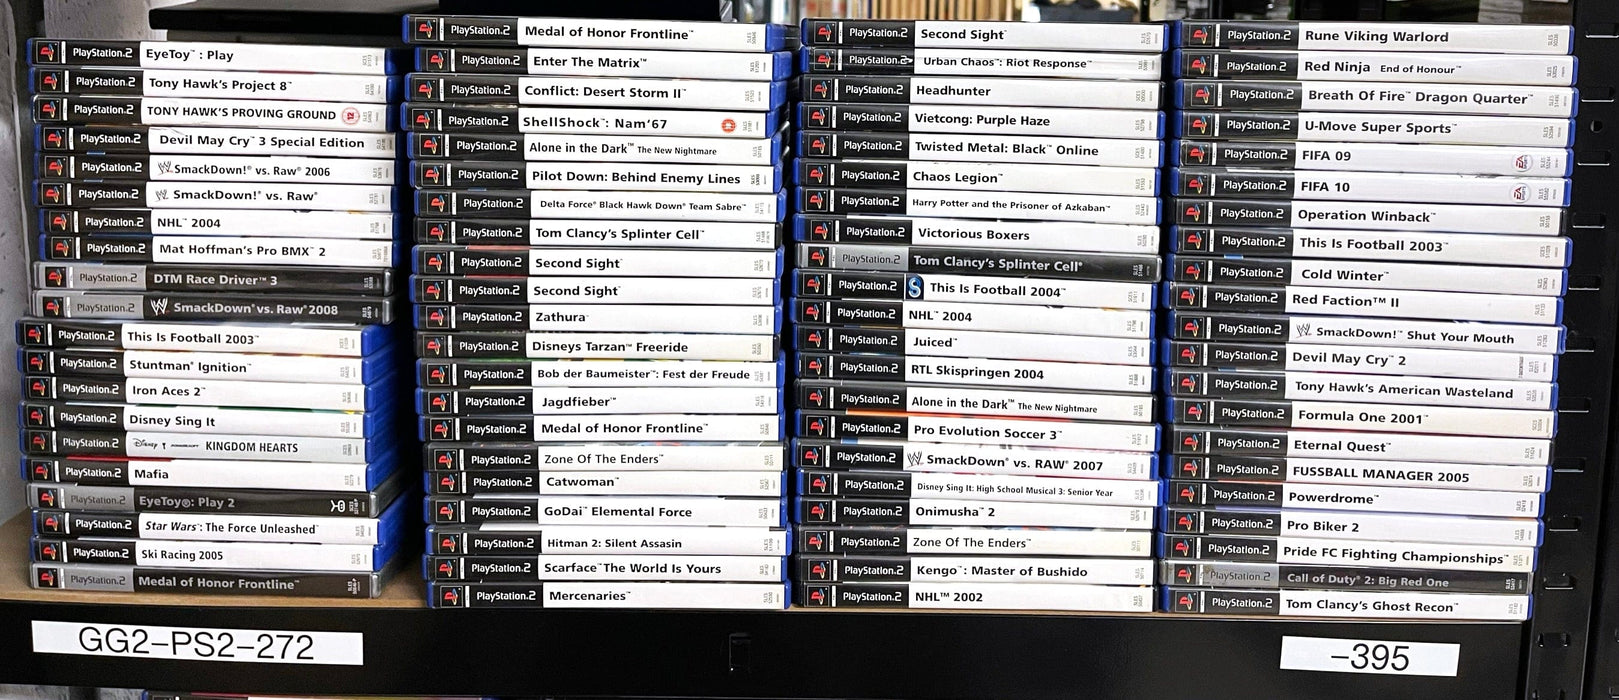 Glaciergames PlayStation 2 Game Hitman 2 - Silent Assassin [Platinum] PlayStation 2 (Nr.700)